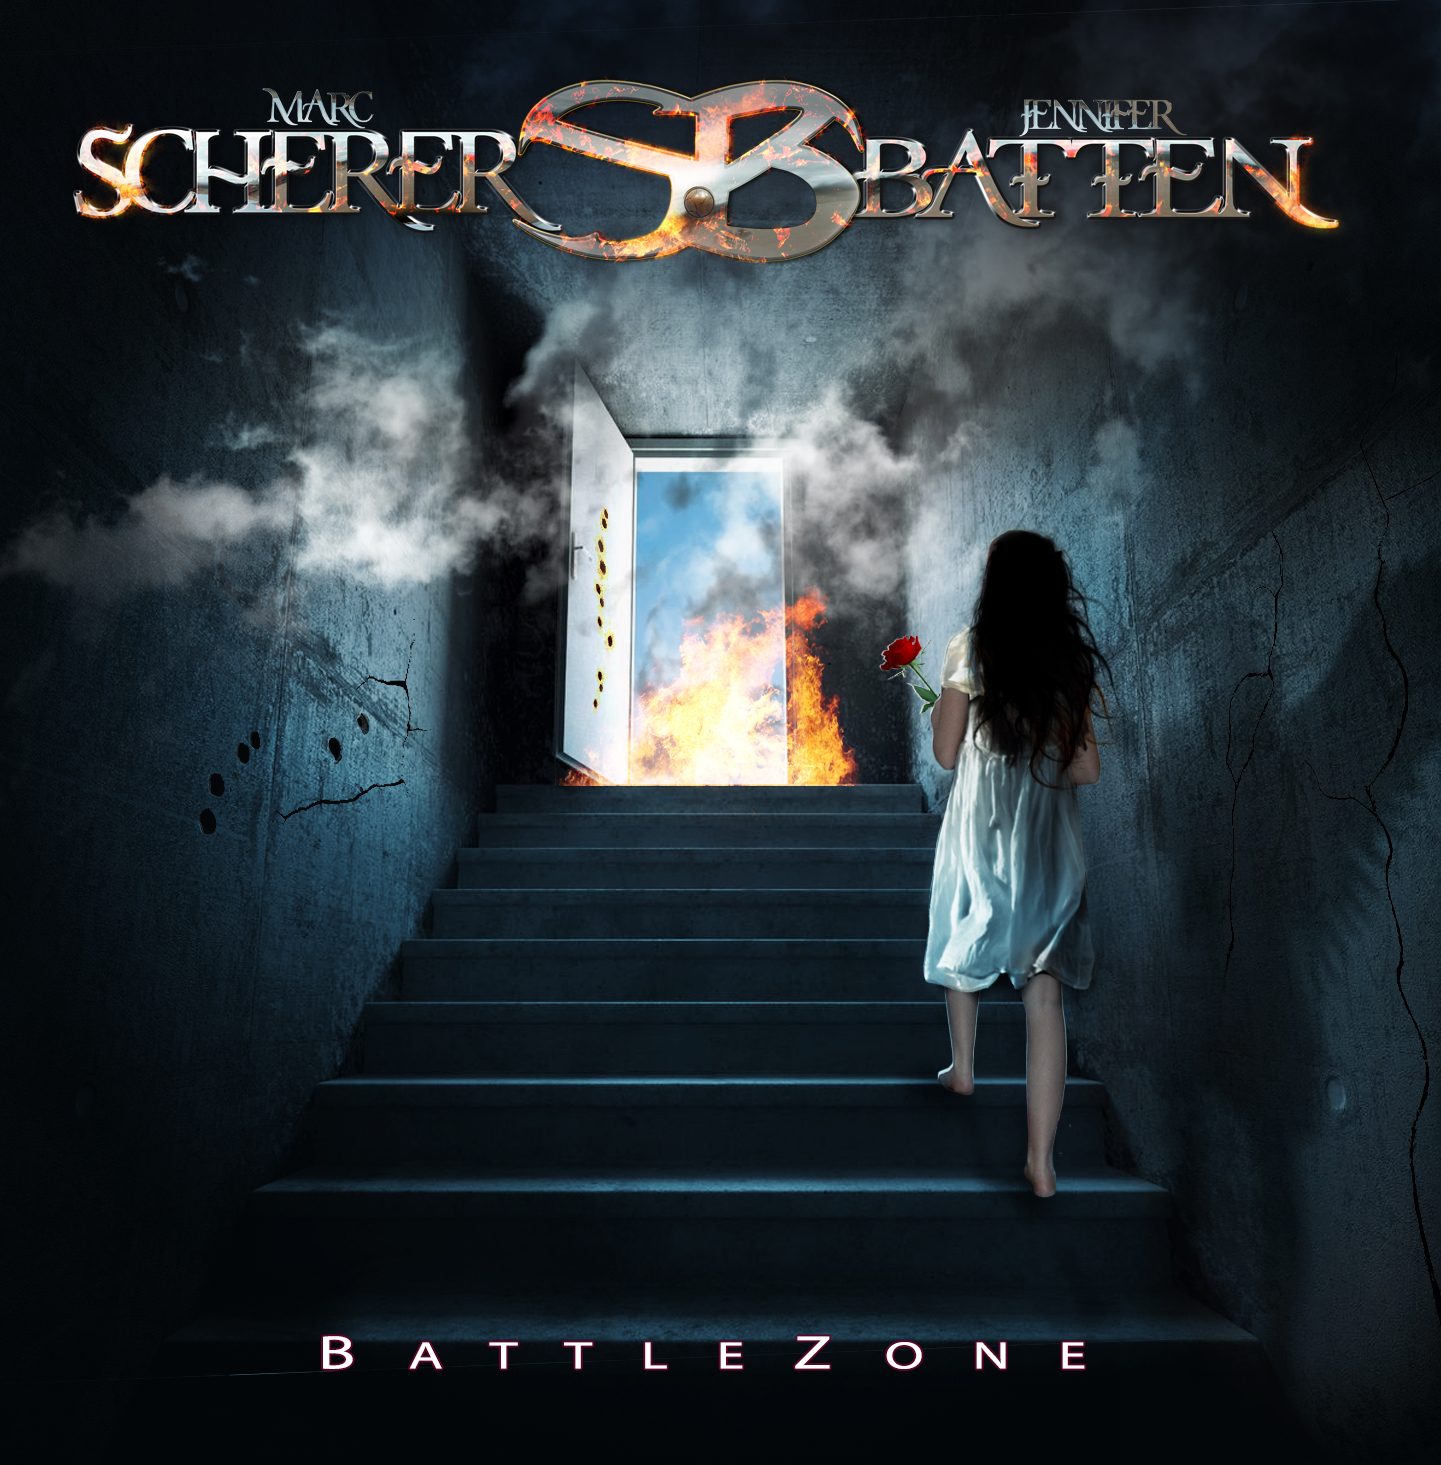 Scherer/Batten "Battlezone" (signed by JB)